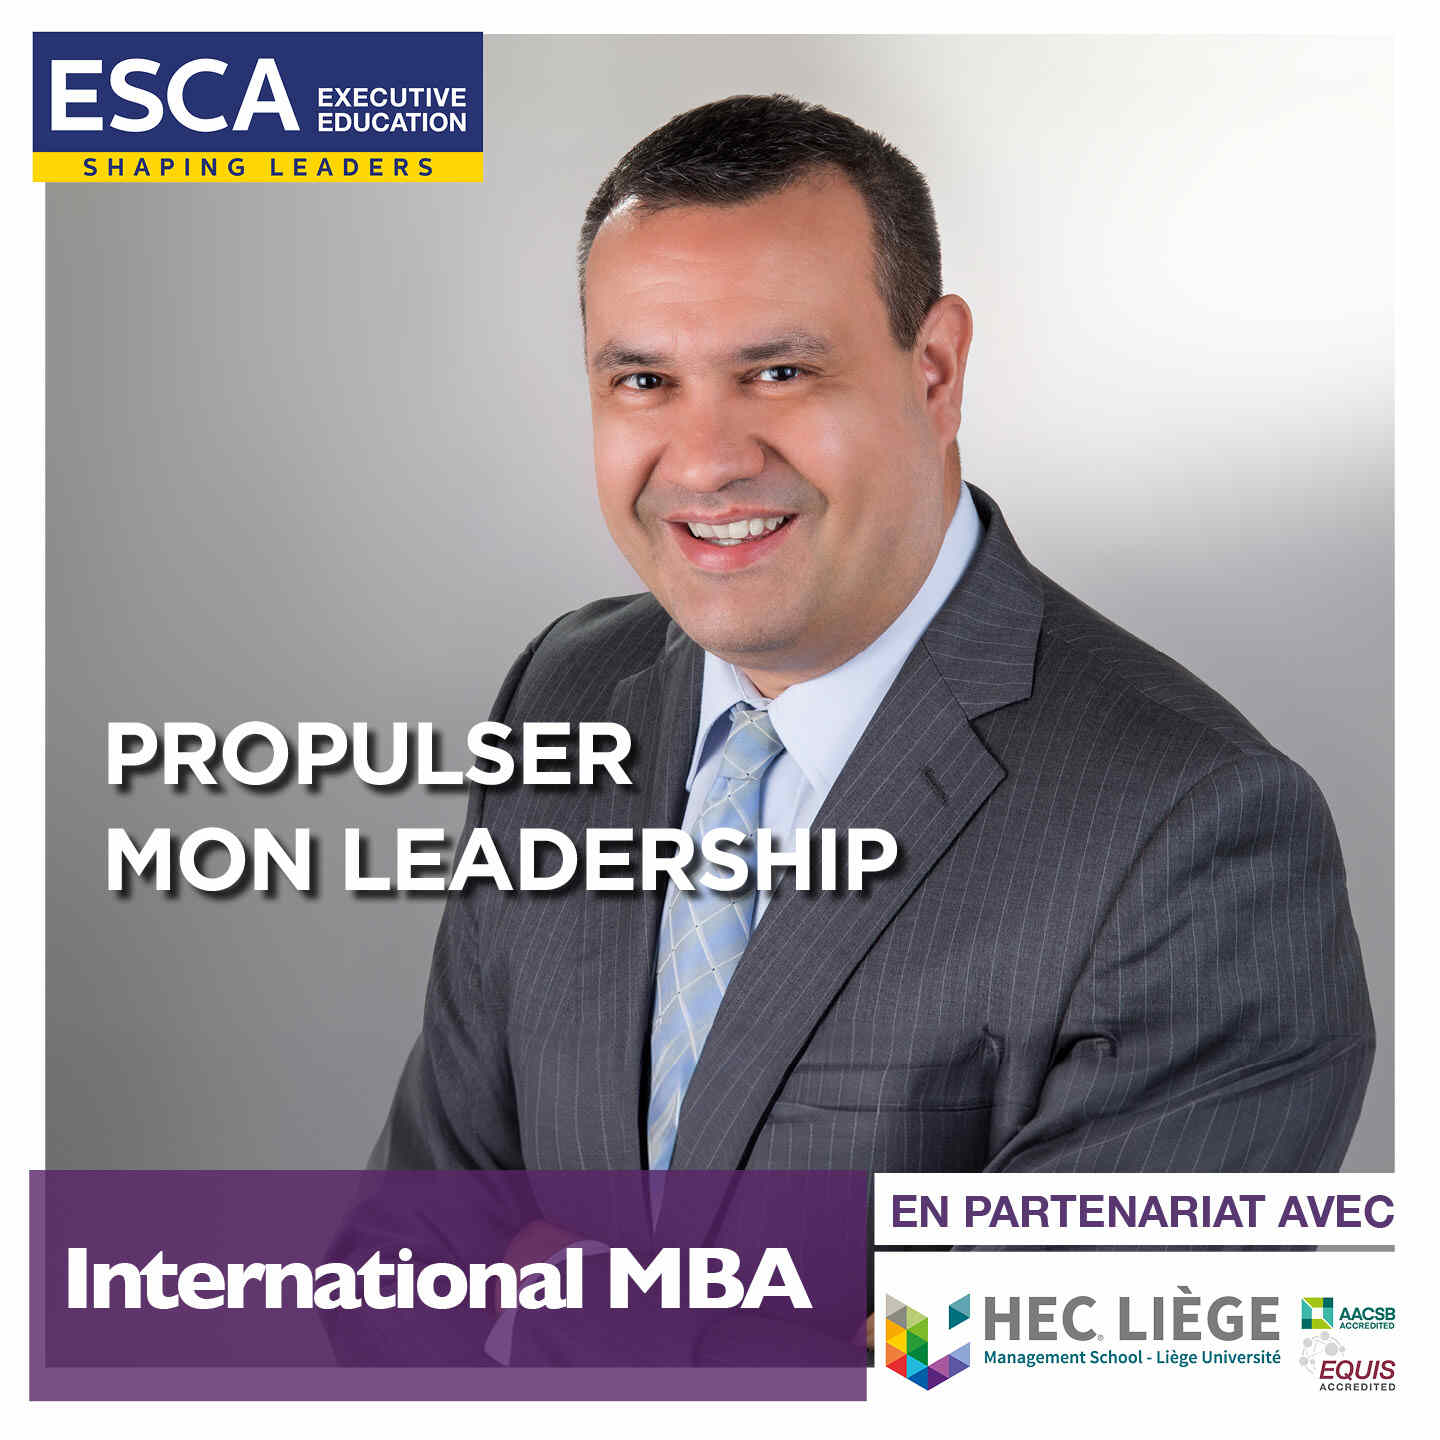 esca-executive-education-hec-liege-mba